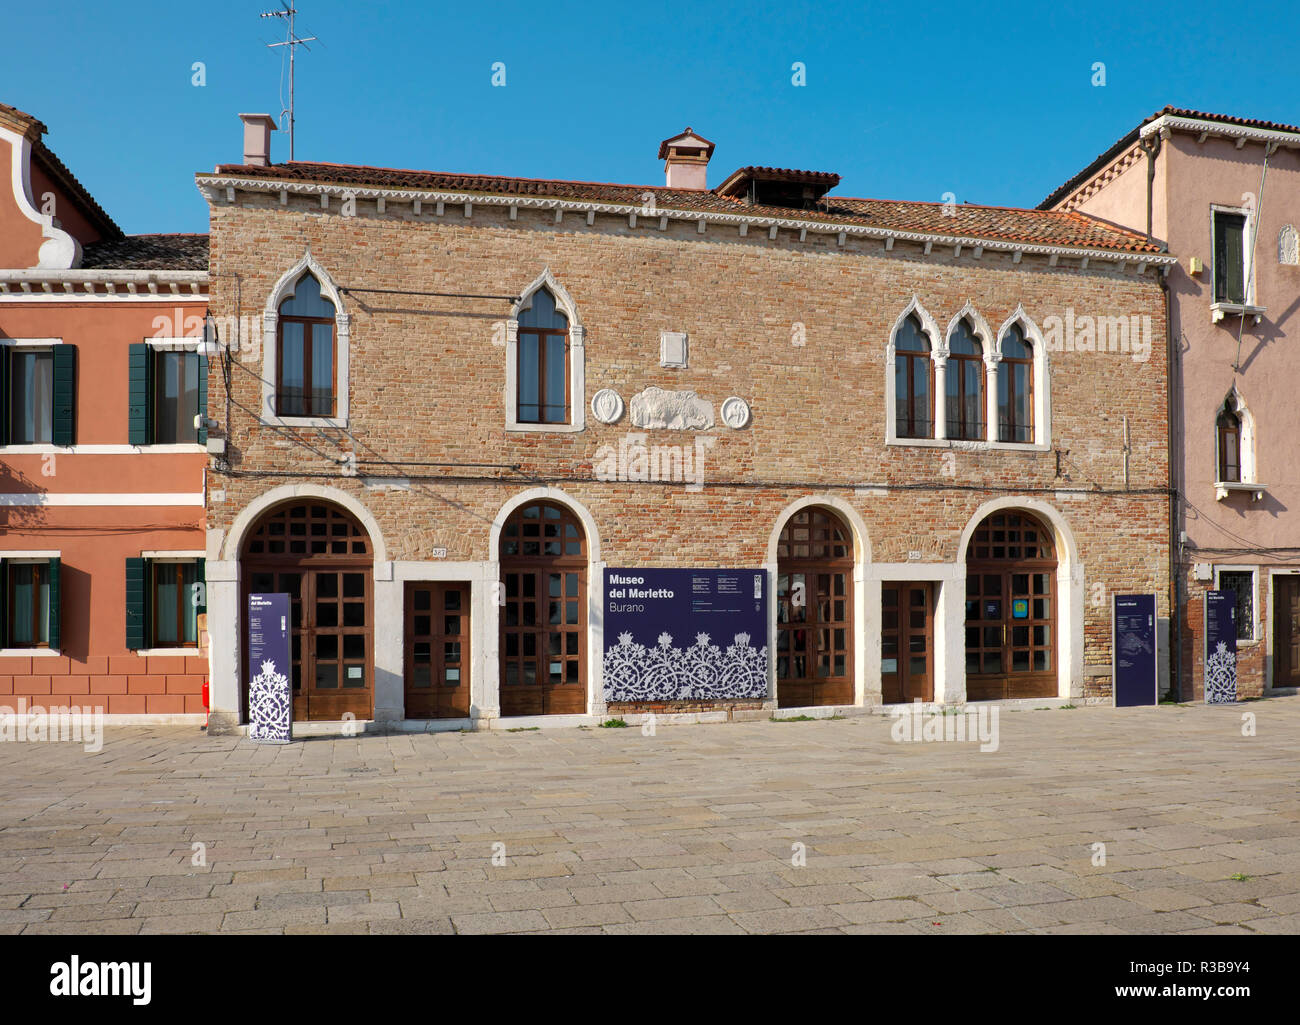 Museo del Merletto, museo del encaje bordado, la isla de Burano, Venecia, Véneto, Italia Foto de stock